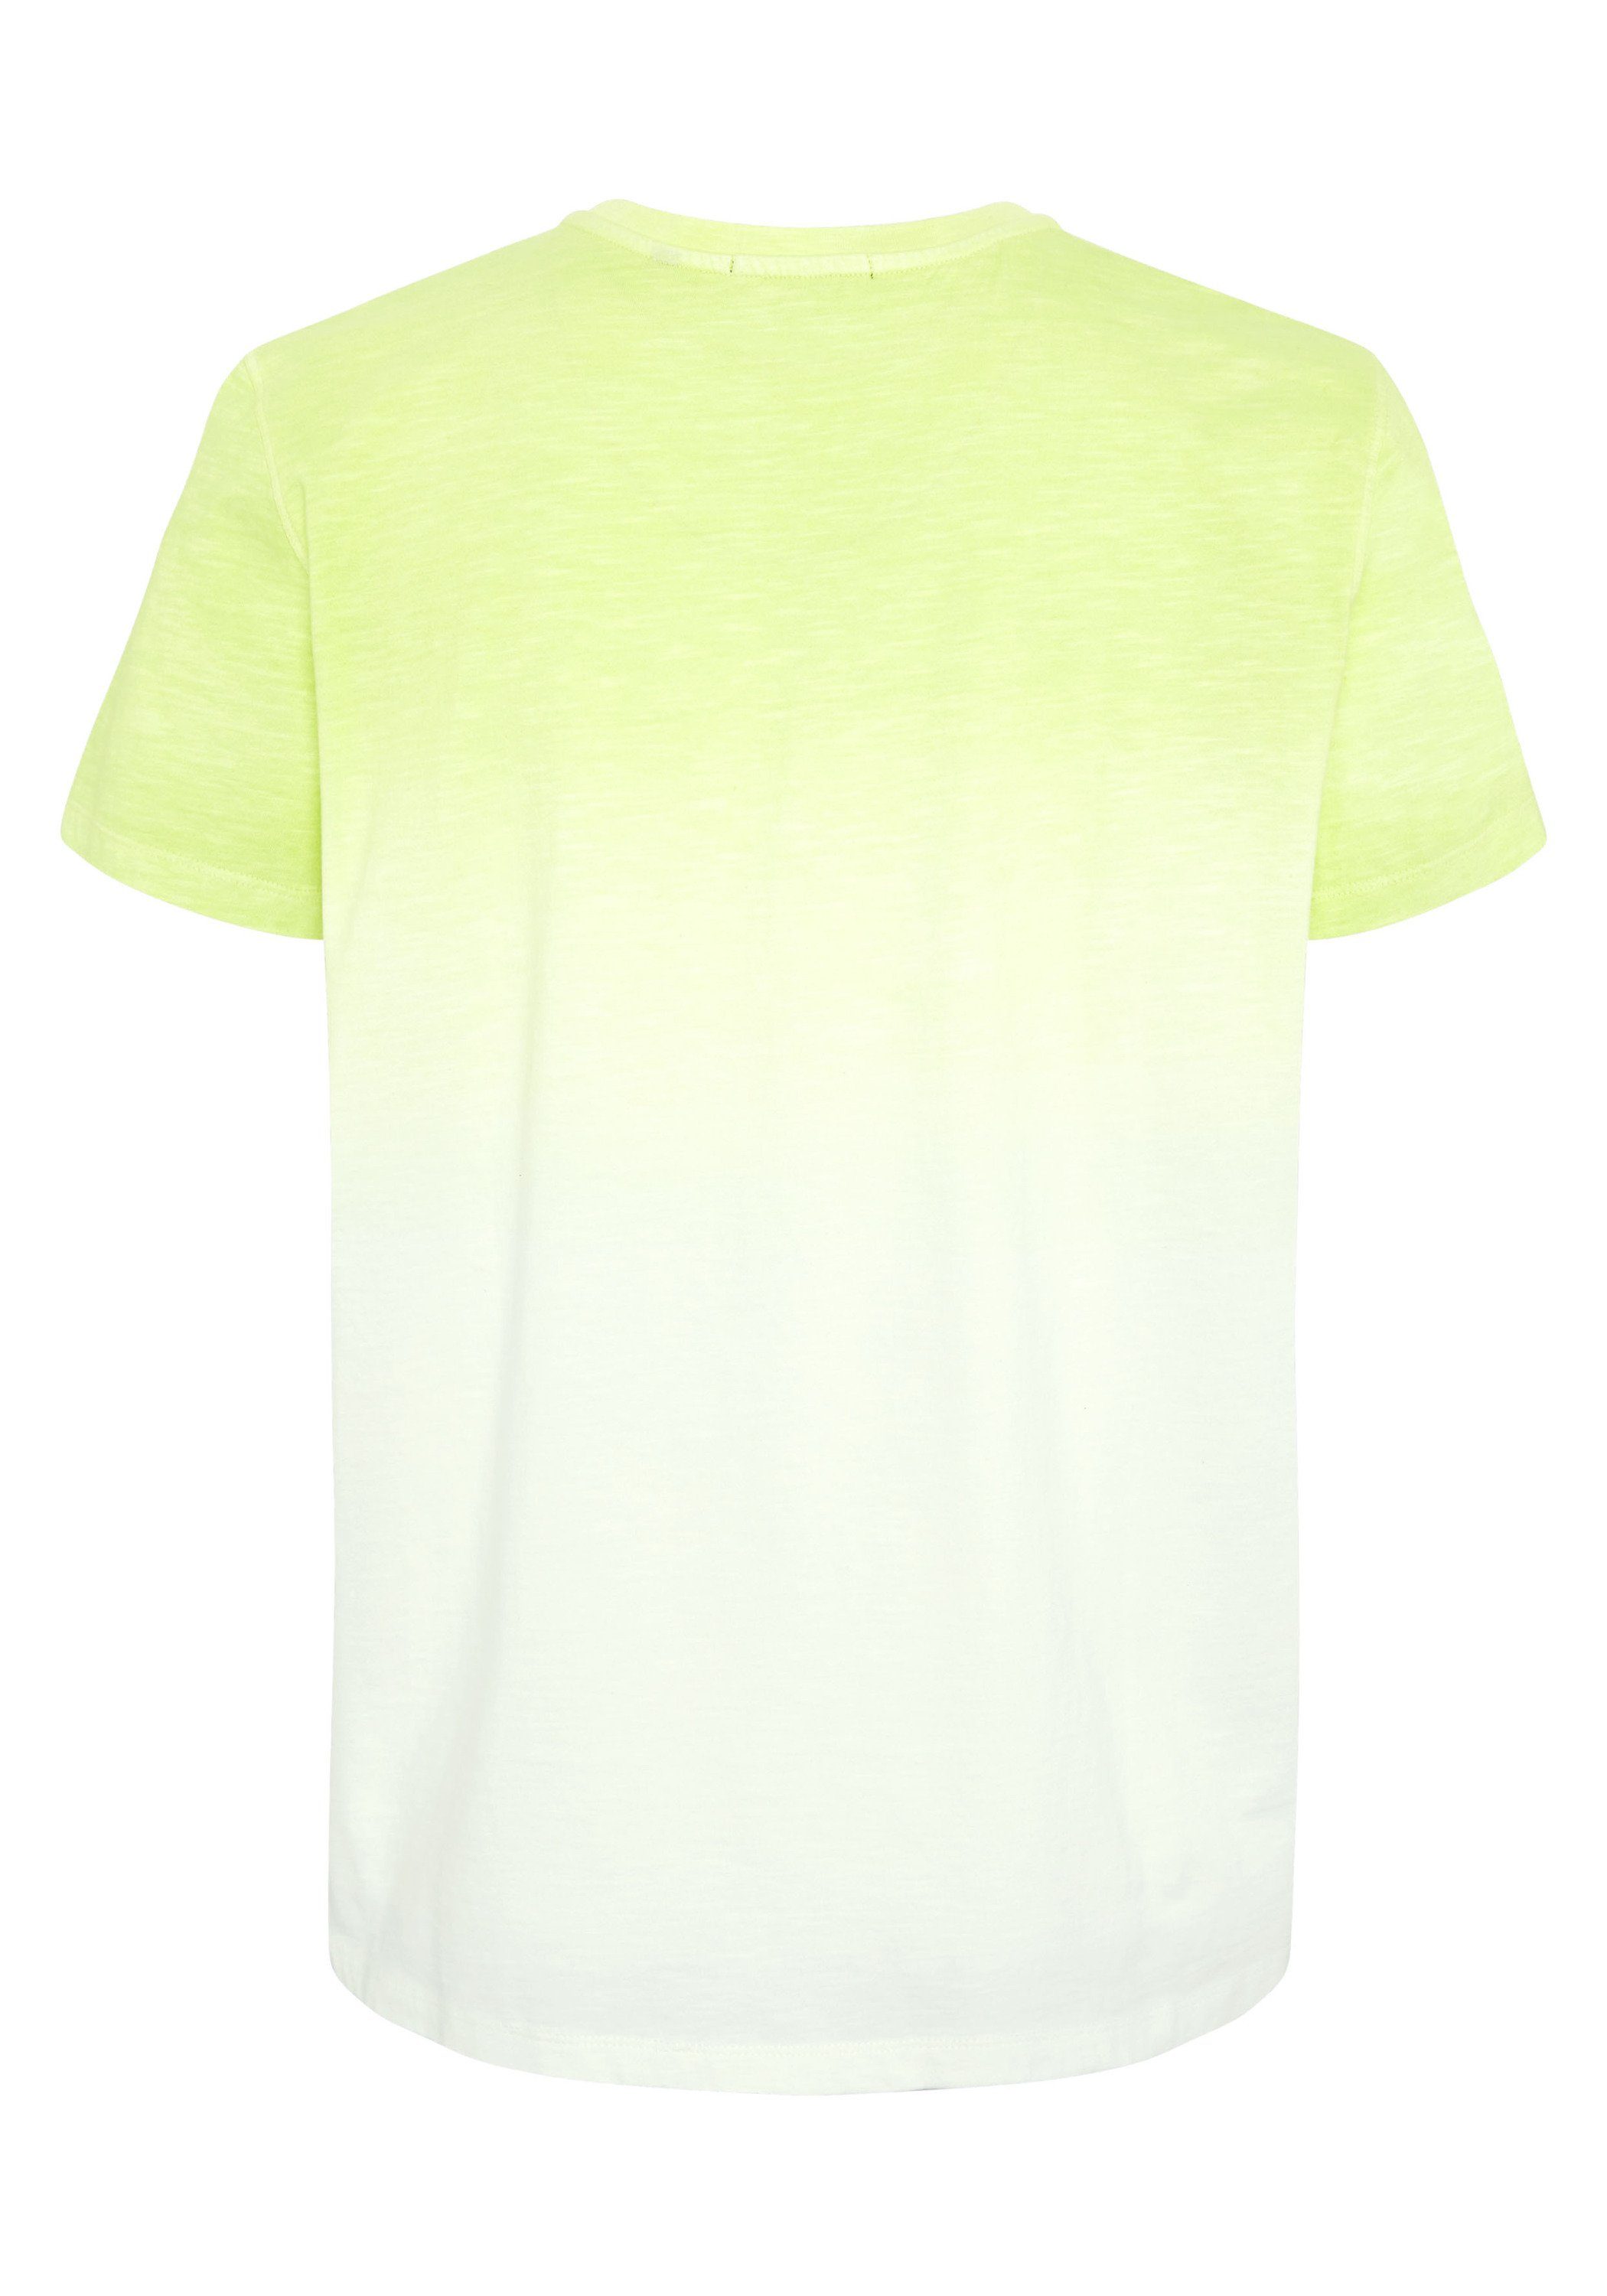 Chiemsee Print-Shirt T-Shirt Green/Dark Green im 6268 1 Farbverlauf mit Light Slub-Yarn-Textur